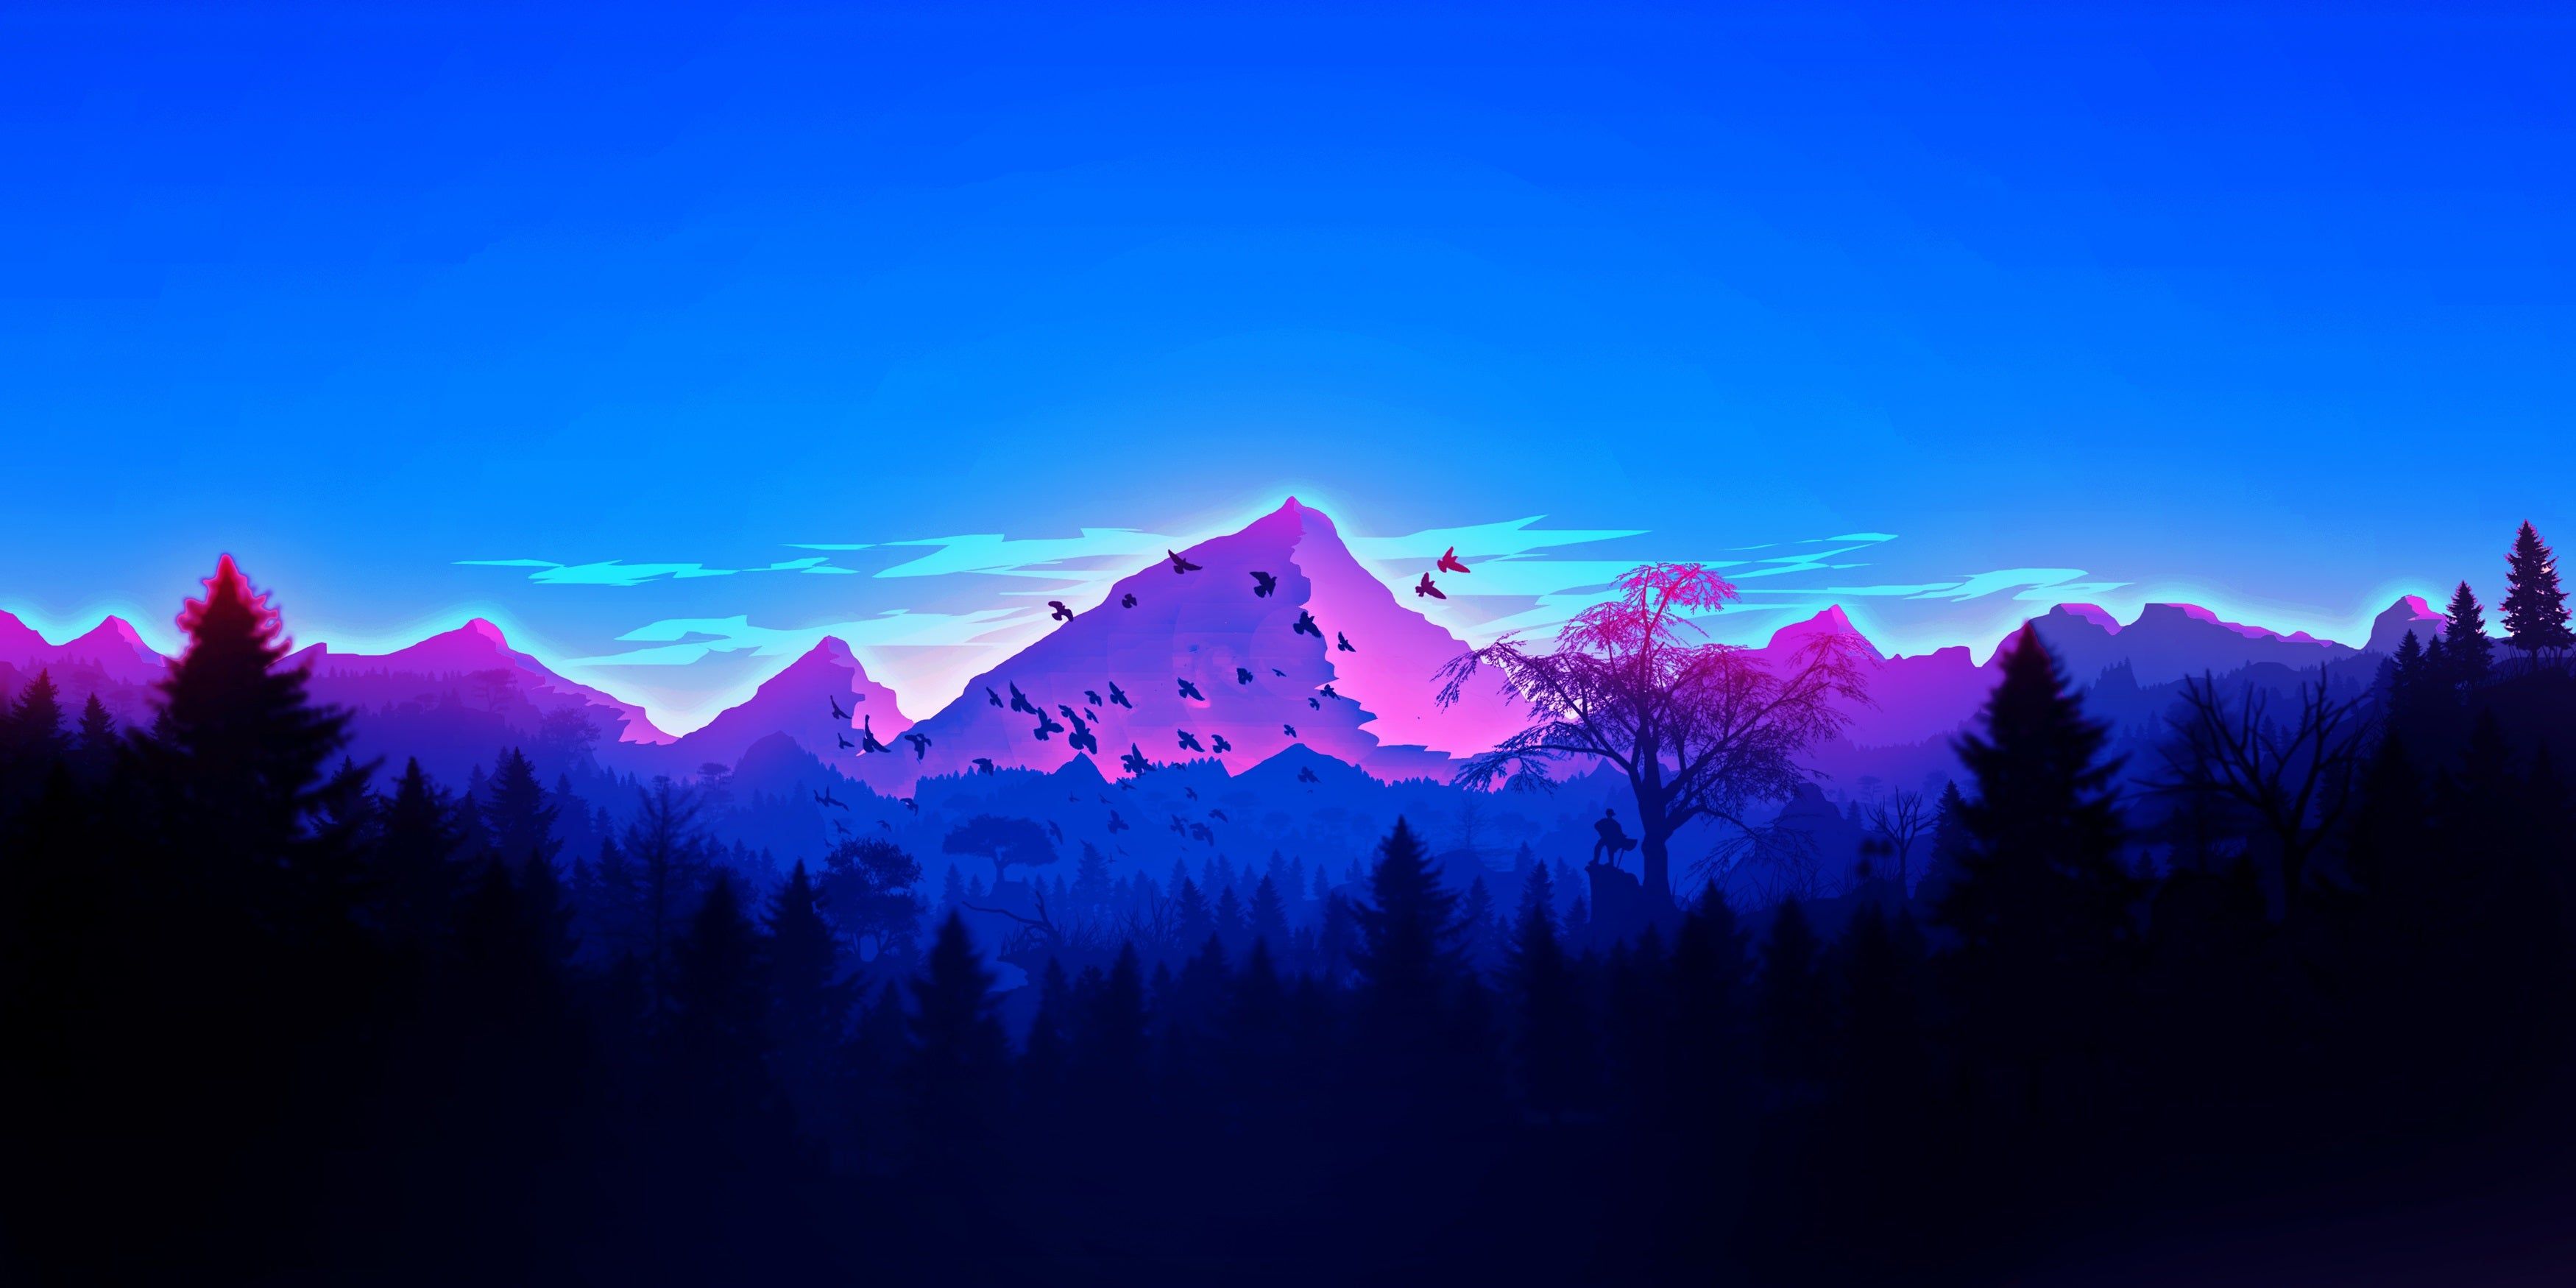 of Mountain 4K wallpaper for your desktop or mobile screen